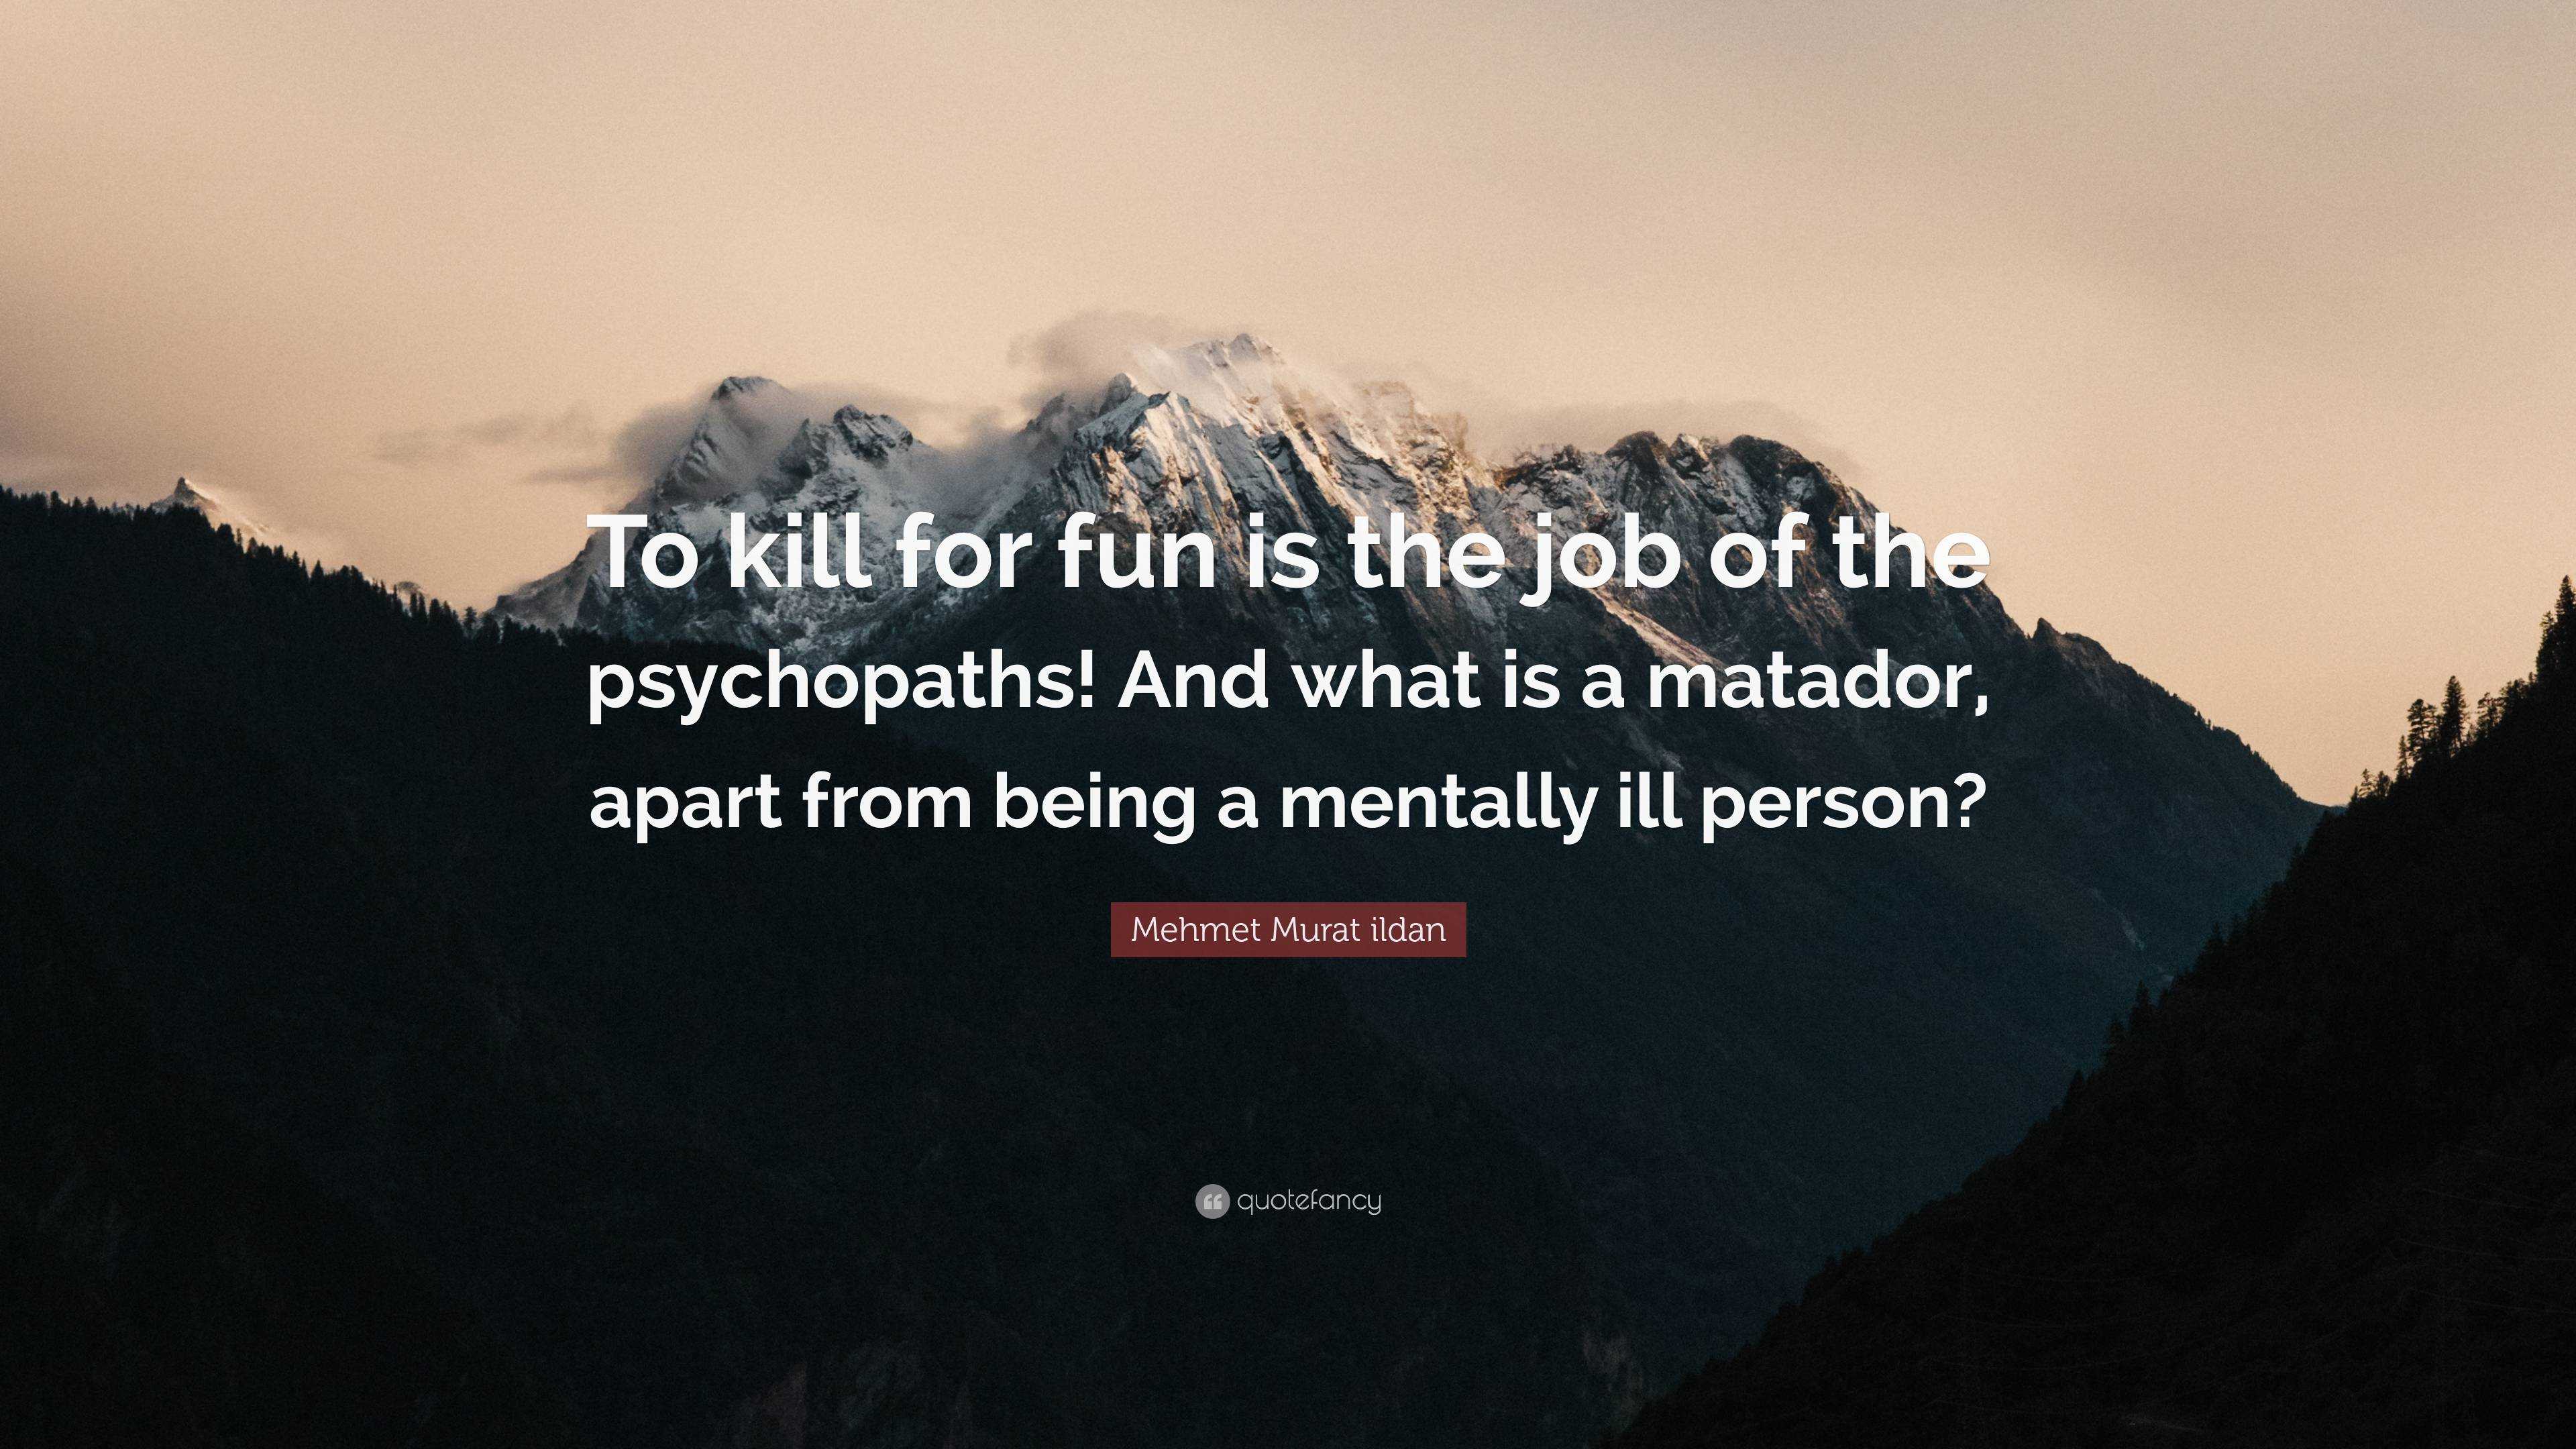 Mehmet Murat ildan Quote: “To kill for fun is the job of the ...